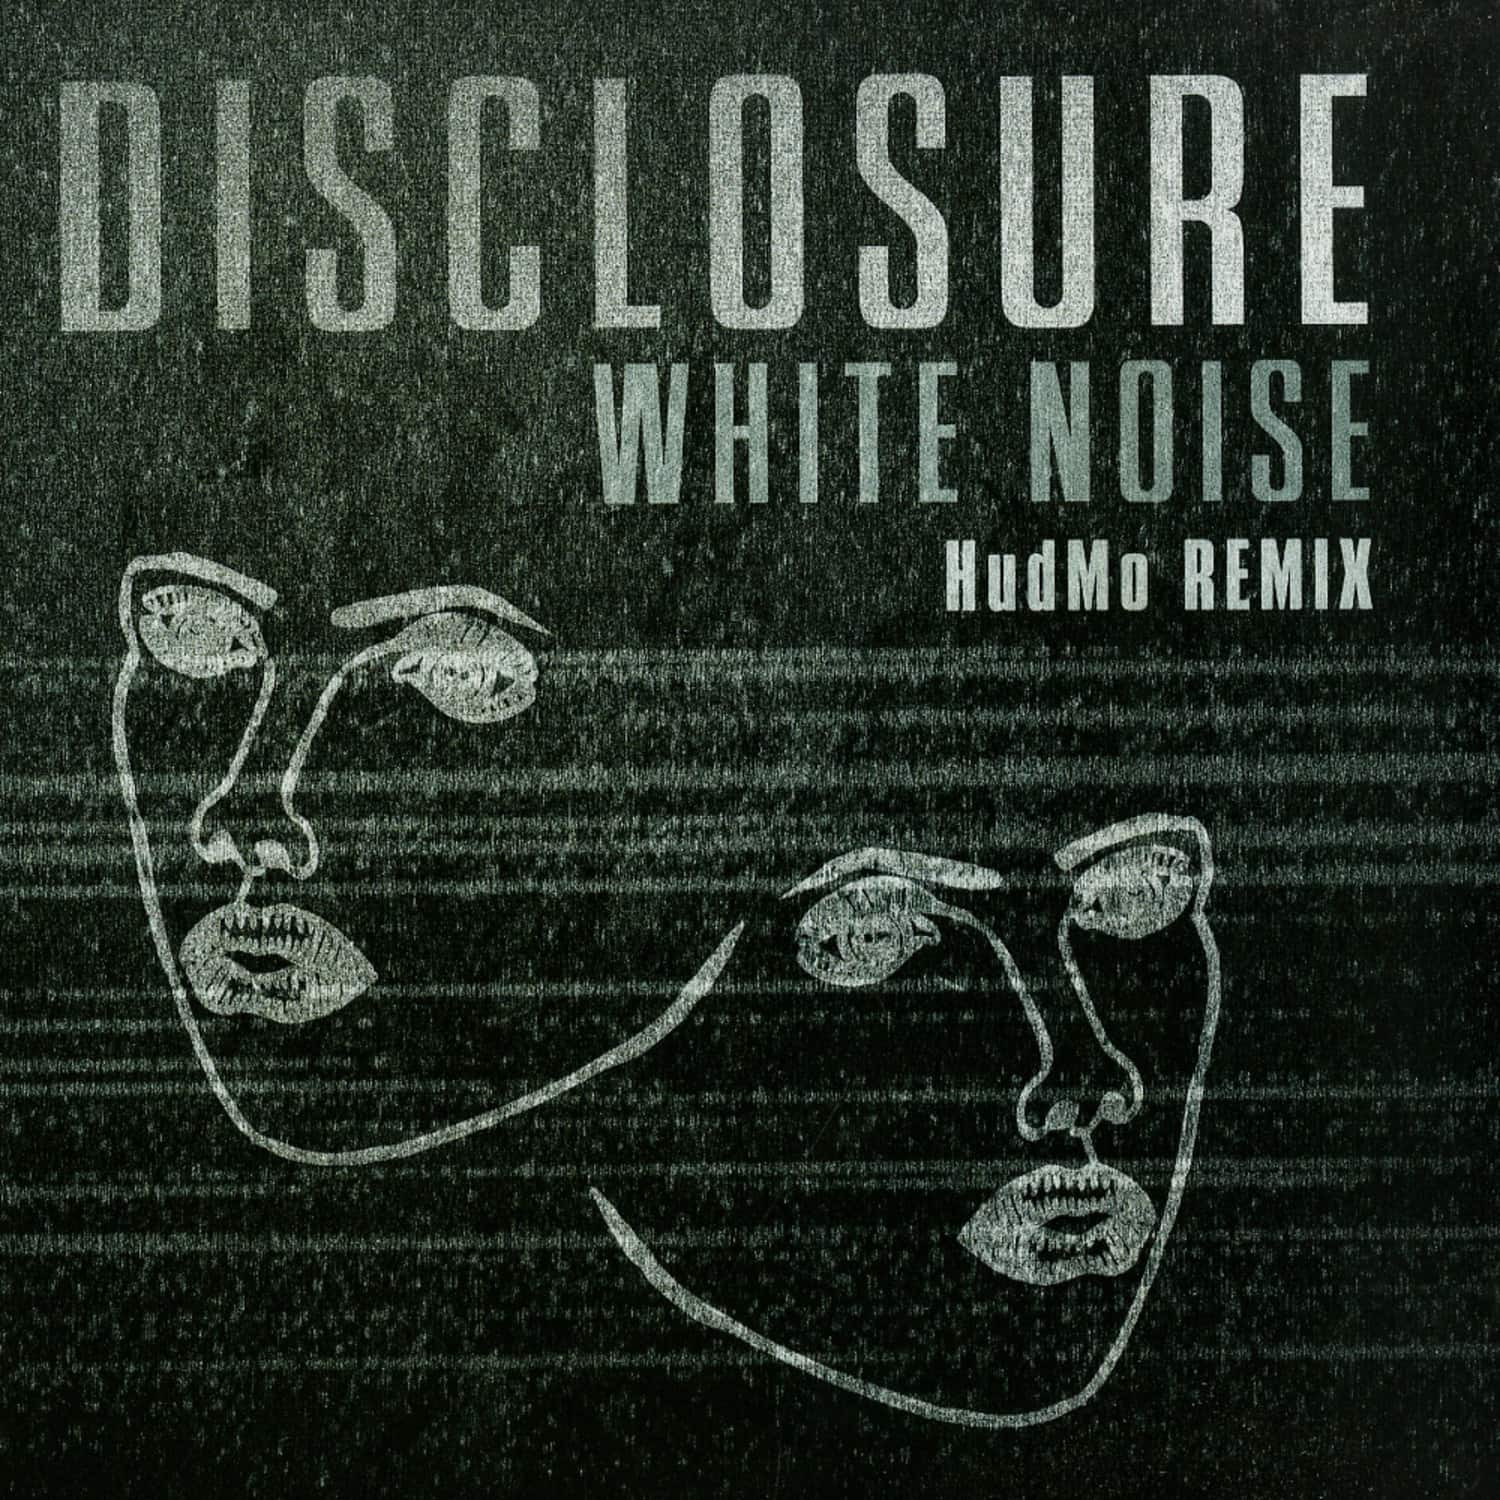 Disclosure - WHITE NOISE 